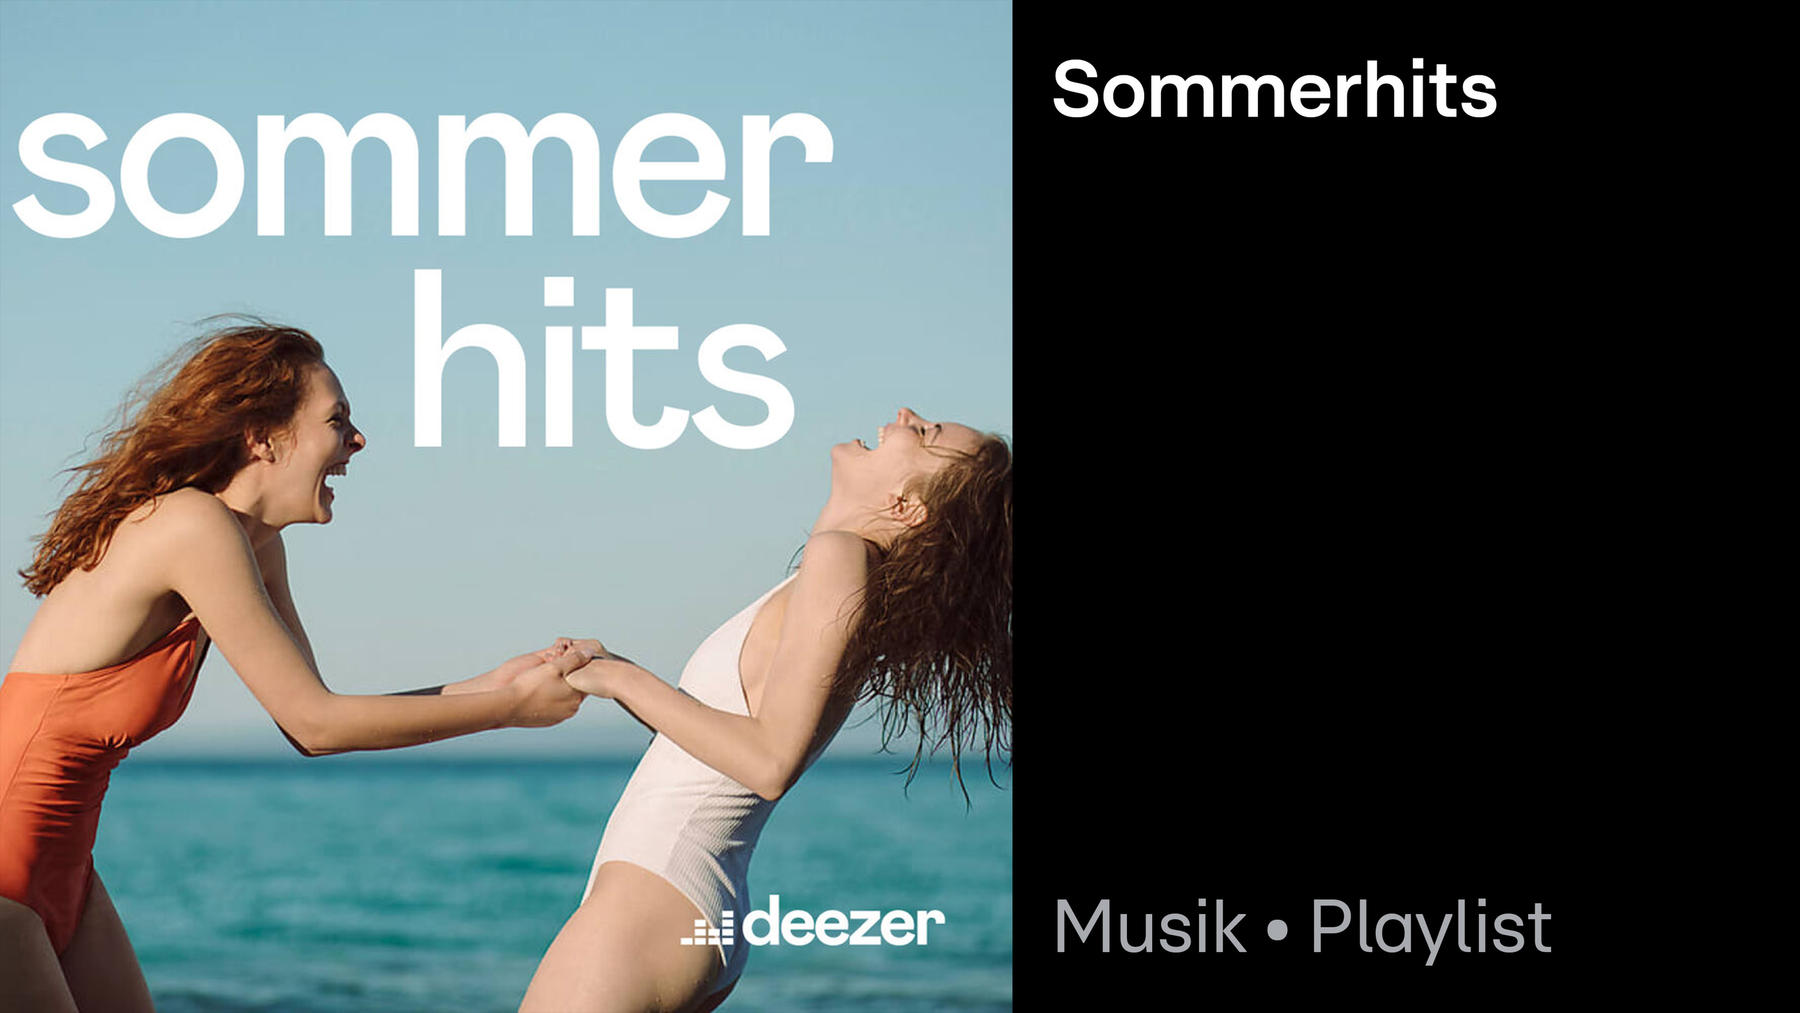 Sommerhits Playlist